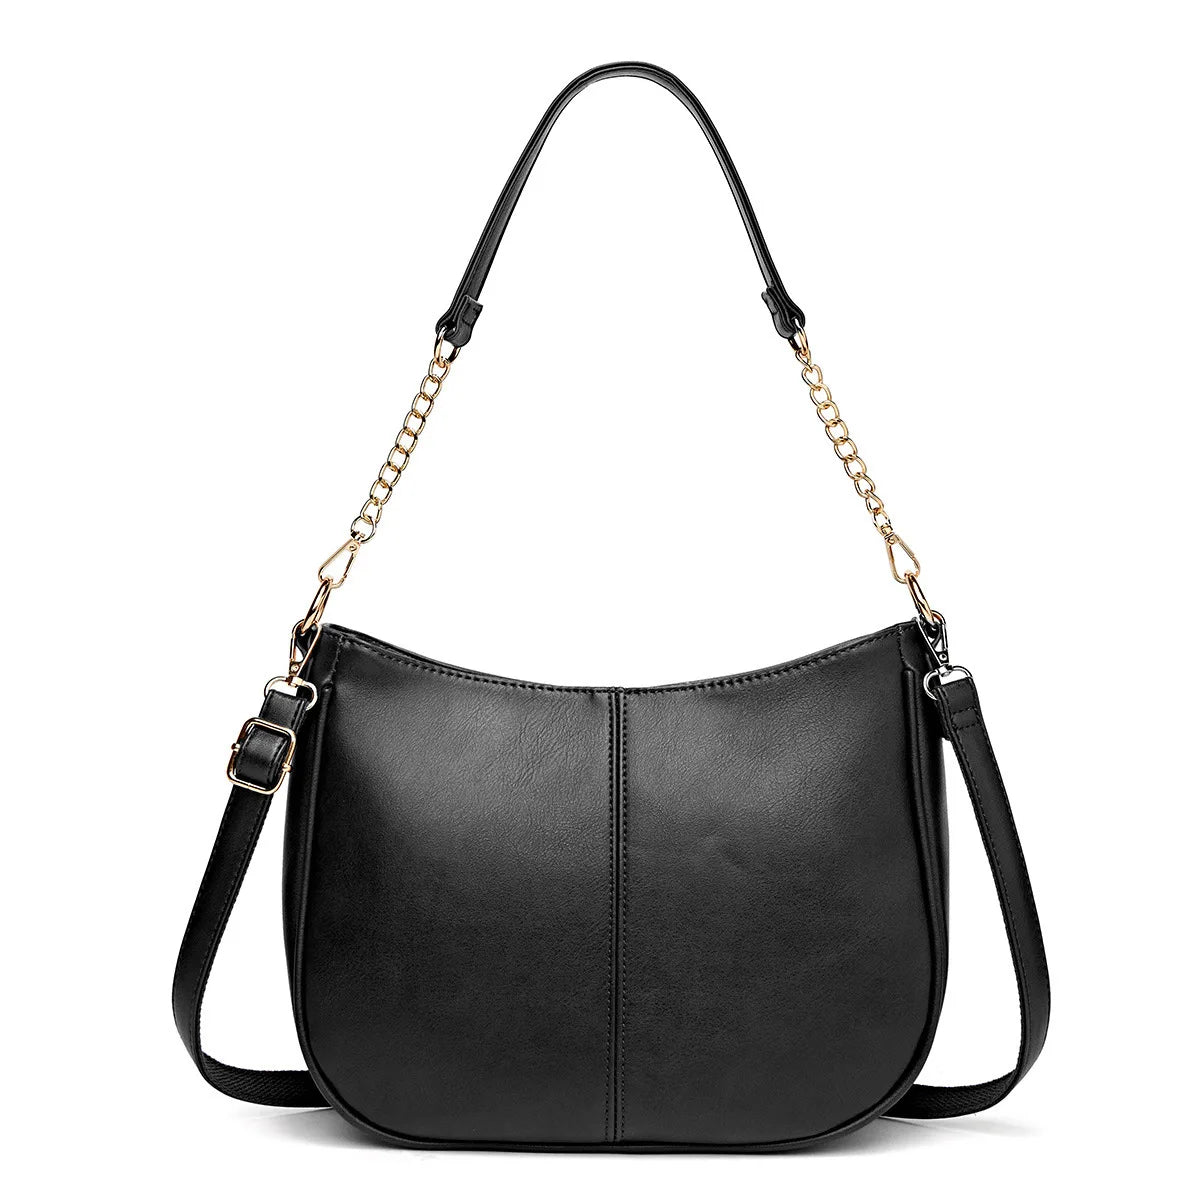 Black Handbag Silver Chain The Store Bags B Black 